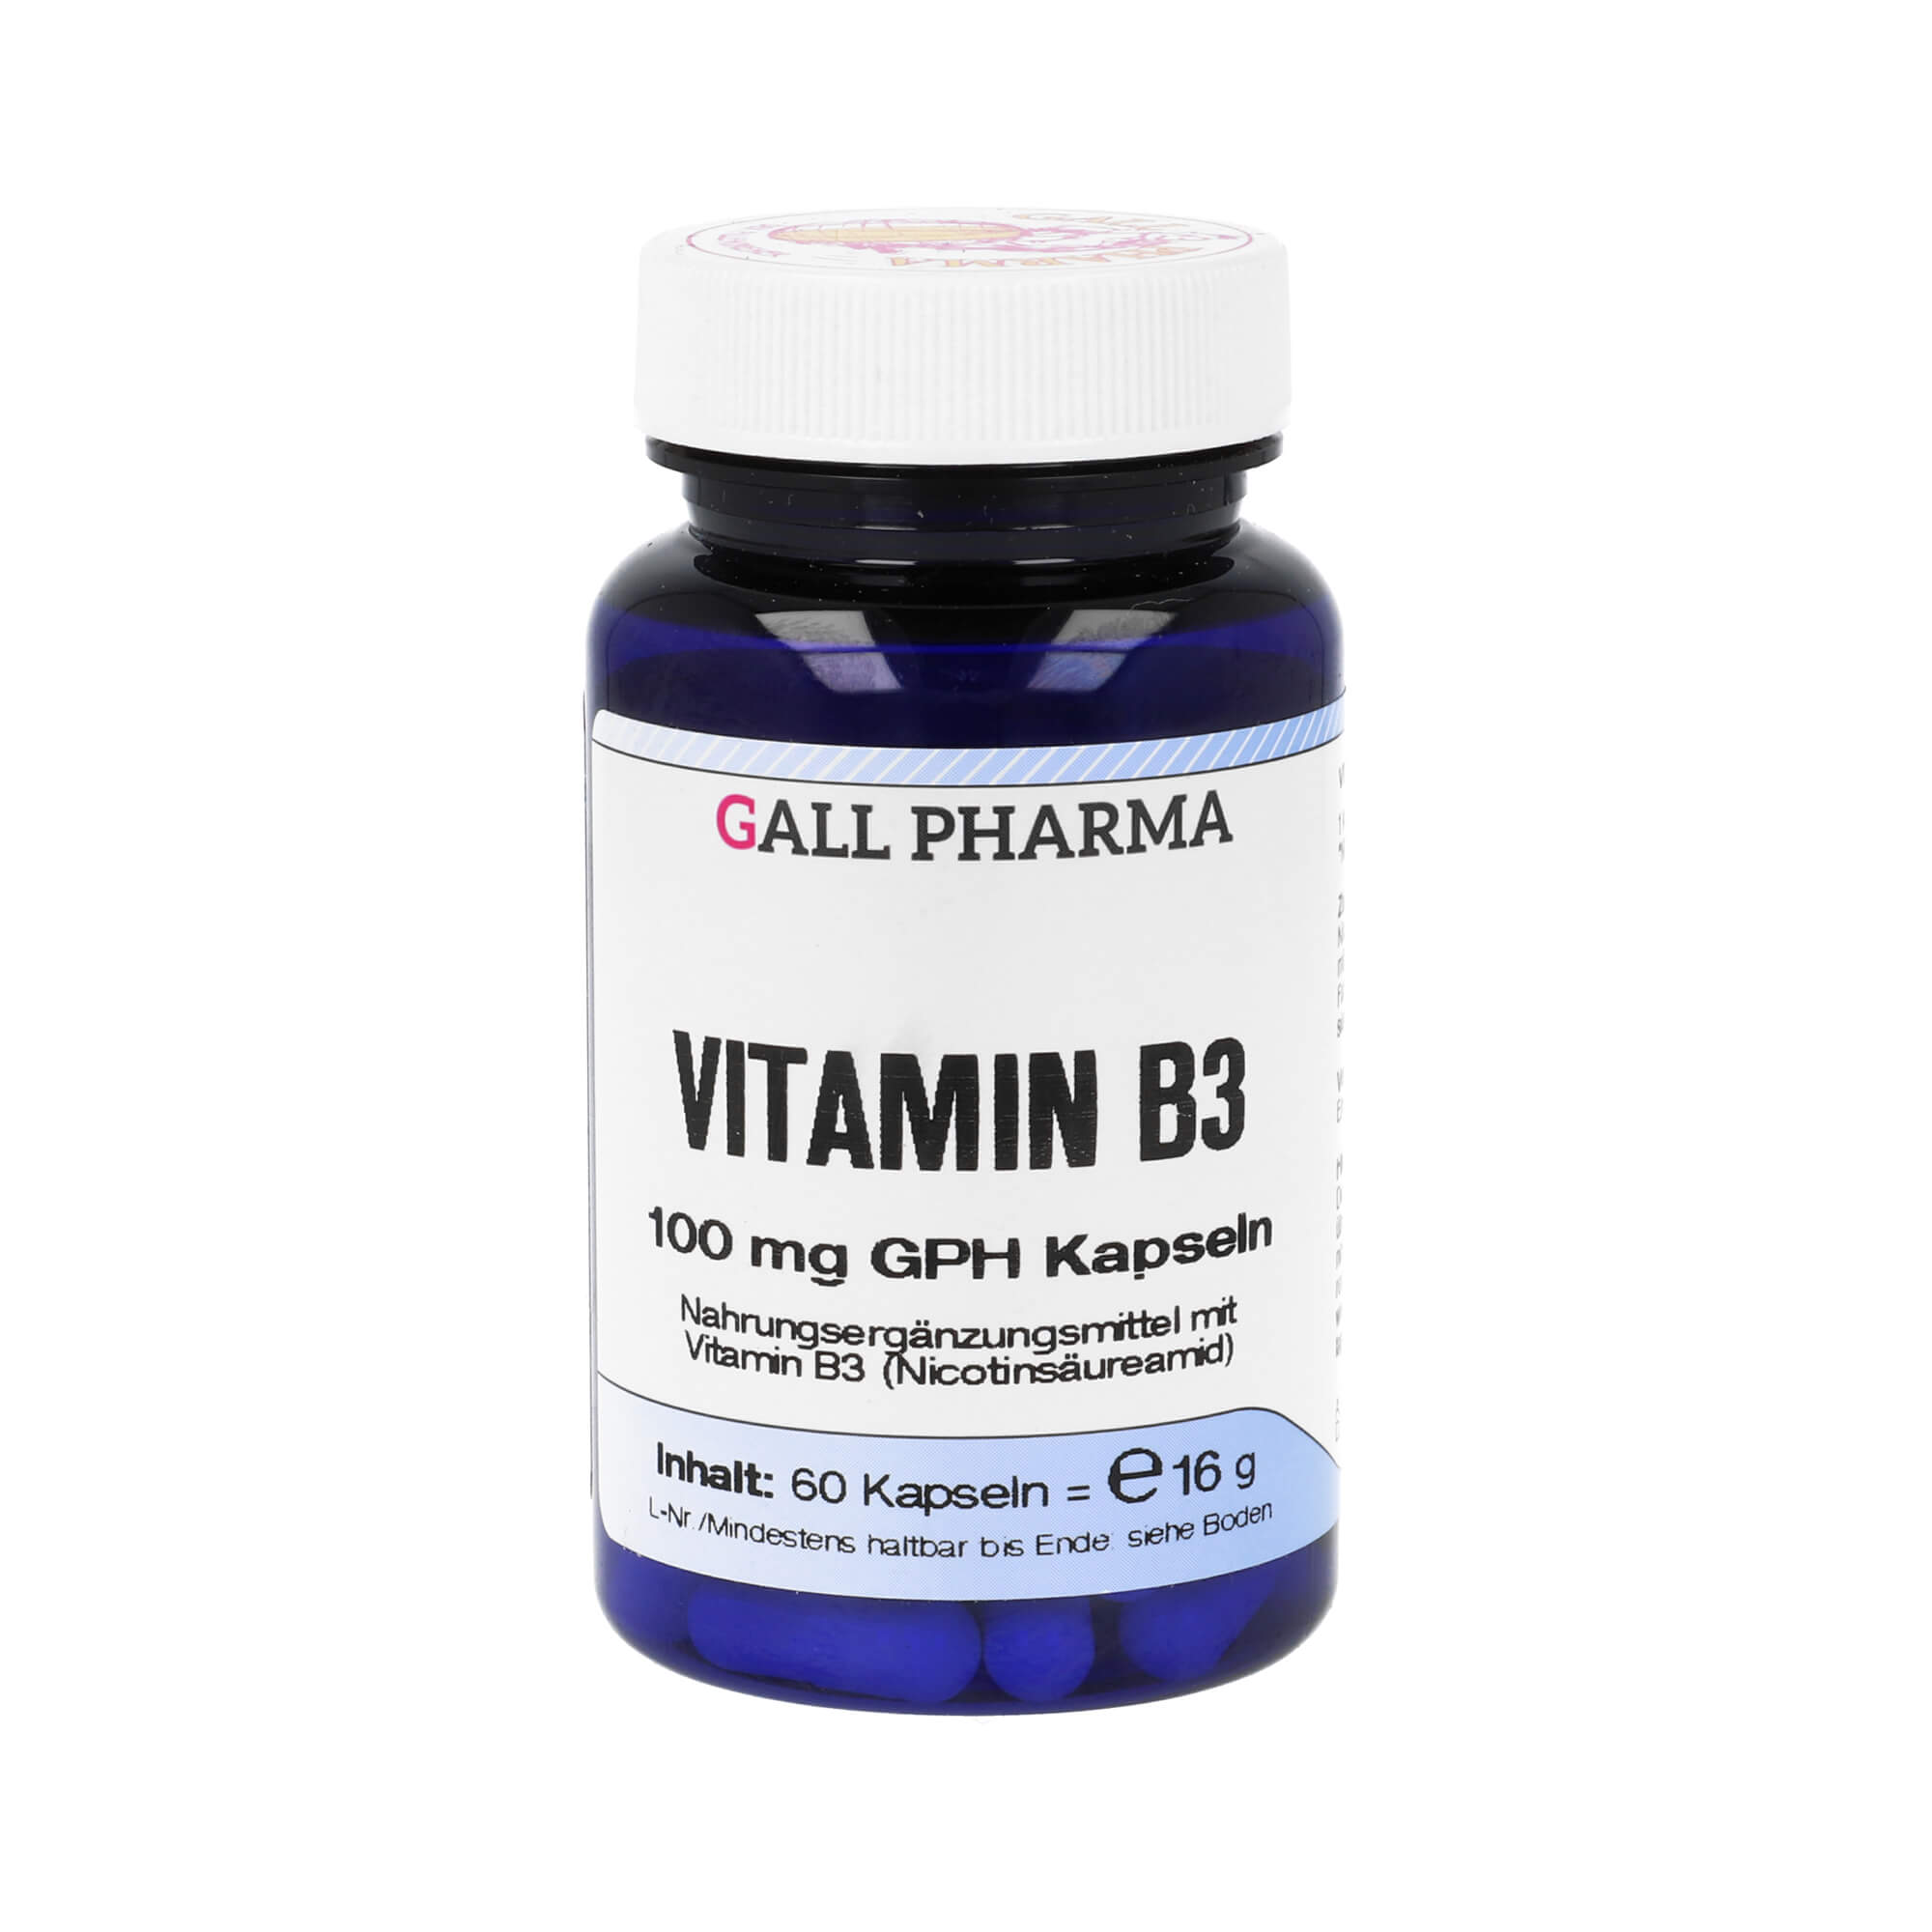 Nahrungsergänzungsmittel mit Vitamin B3.